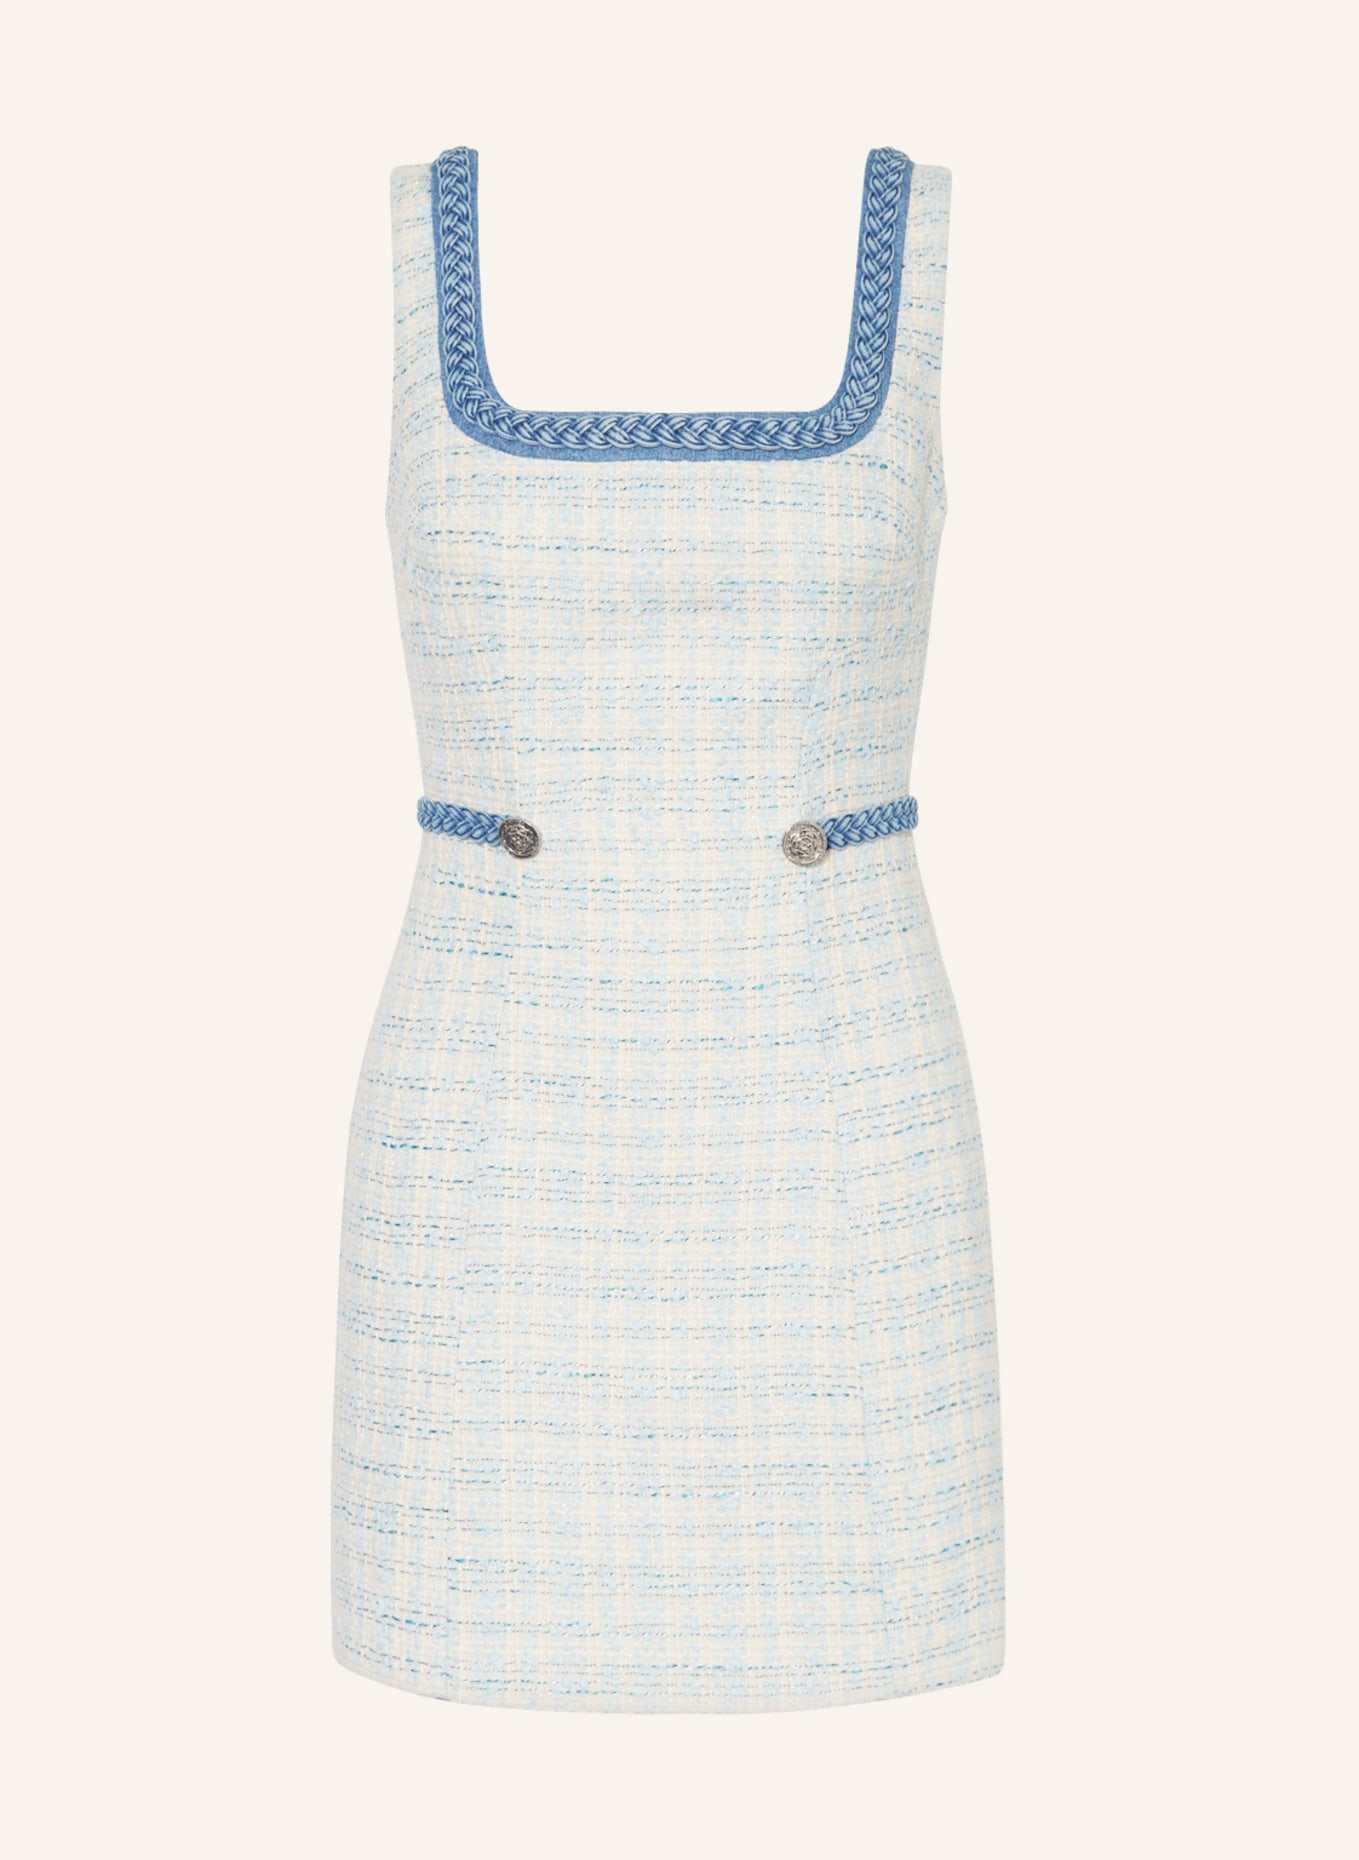 GUESS Tweed-Kleid TOSCA mit Glitzergarn, Farbe: CREME/ BLAU/ HELLBLAU (Bild 1)